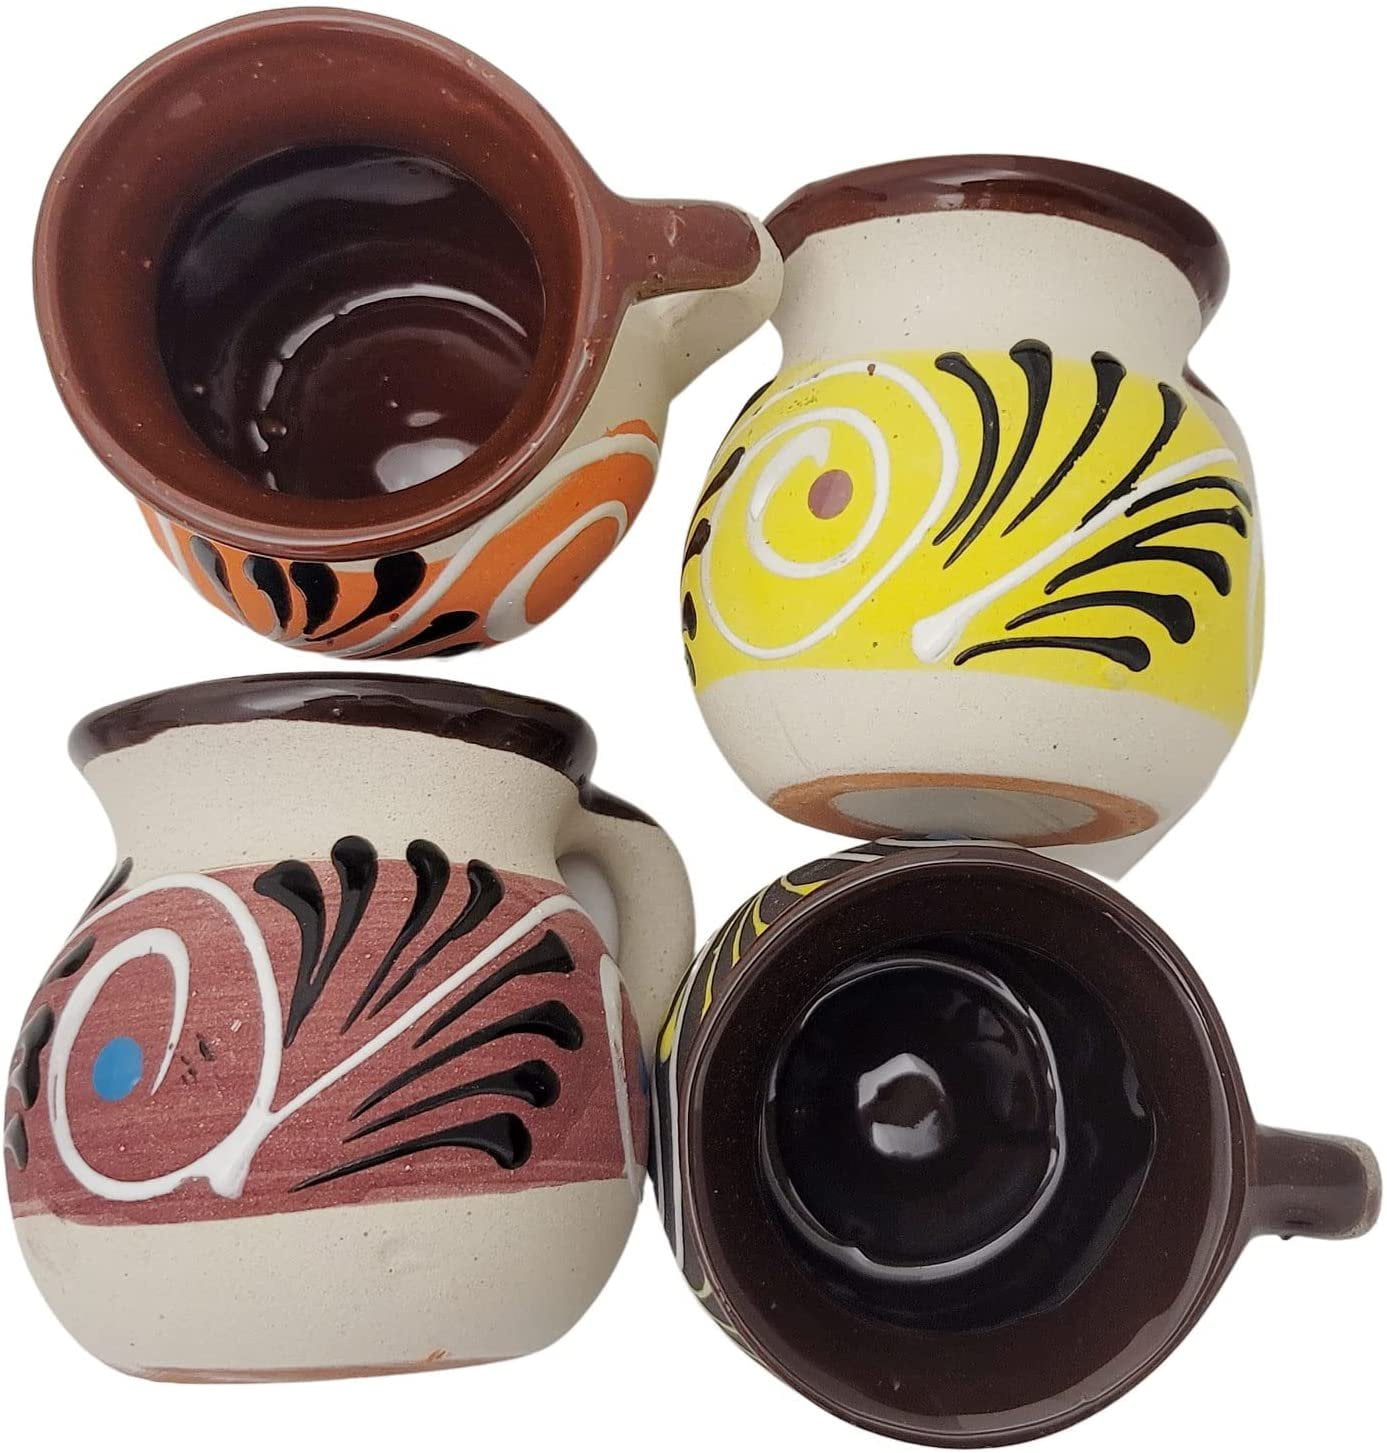 RO Modern Porcelain Coffee & Tea Set